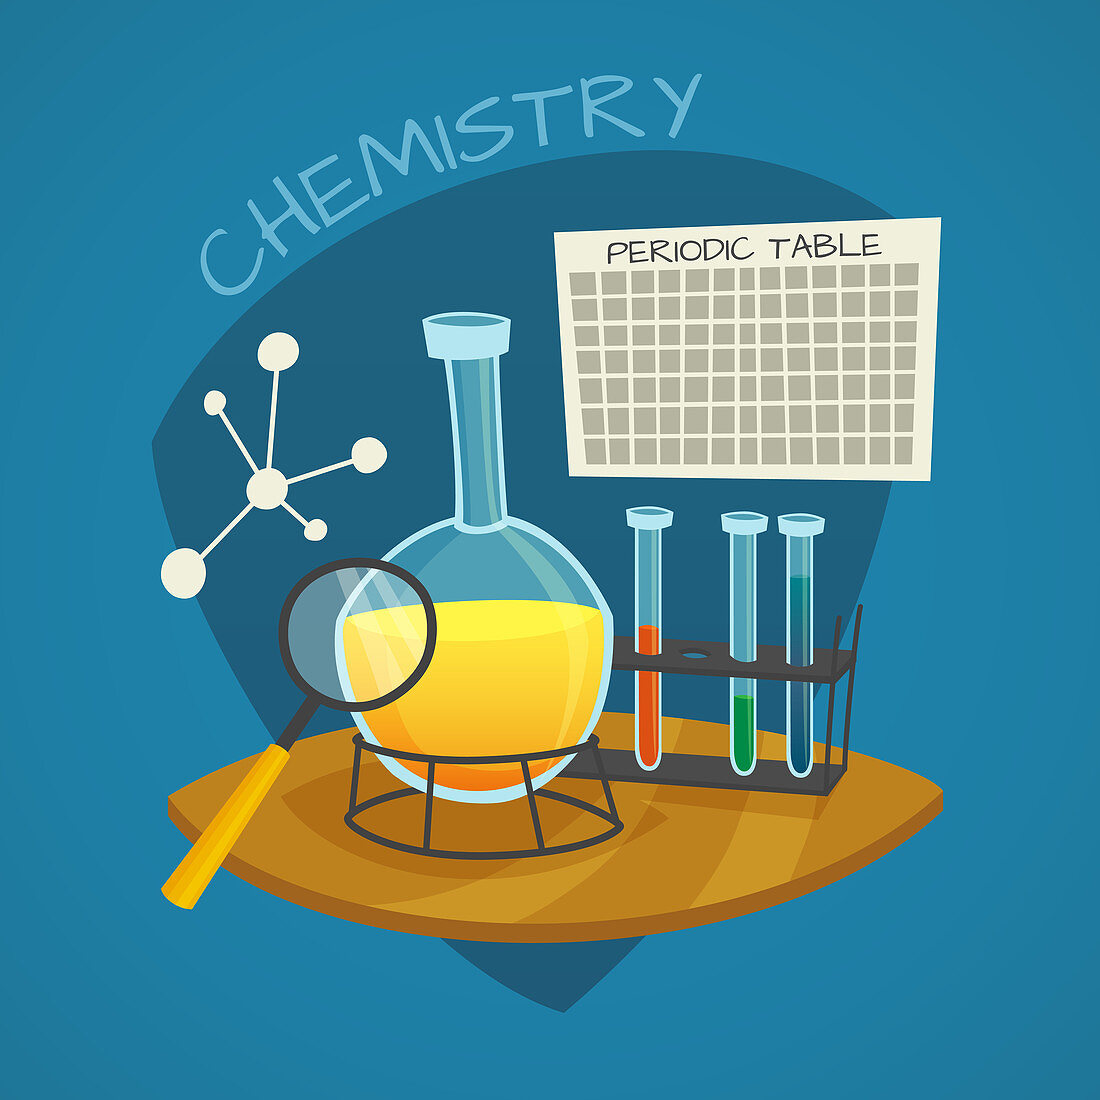 Chemistry experiment, illustration